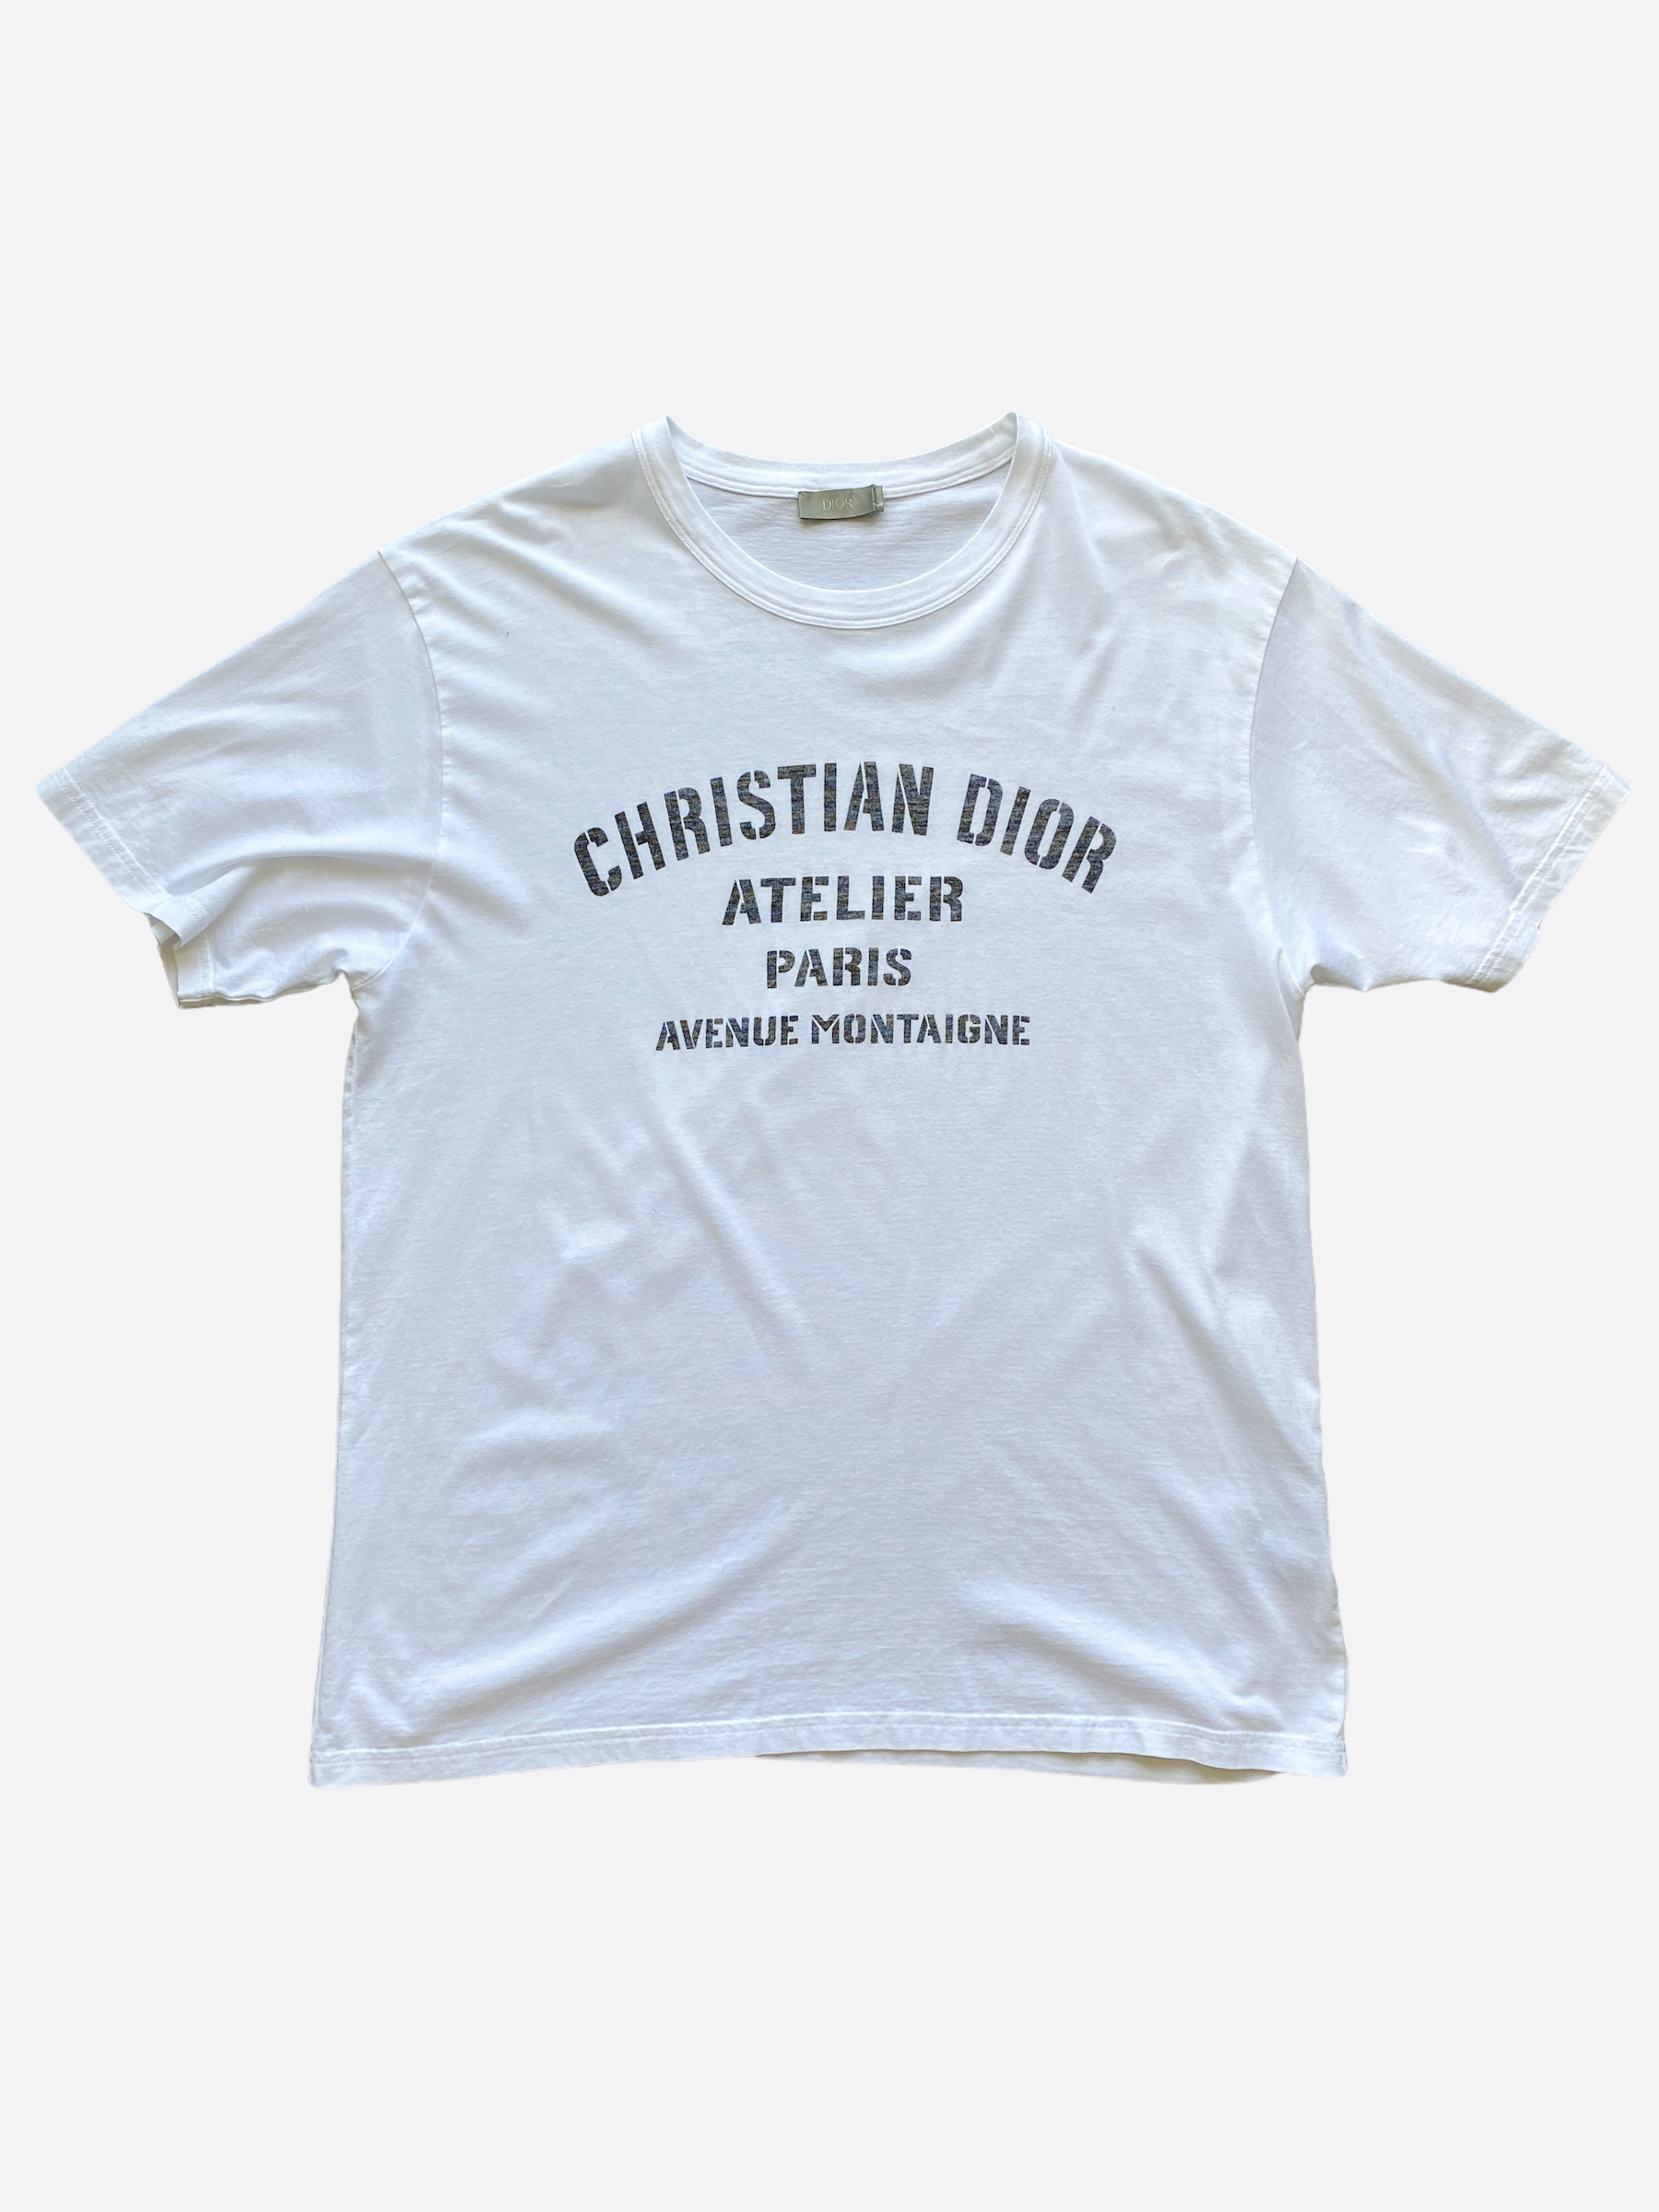 Christian Dior Atelier T Shirt Dior T Shirts Christian Dior